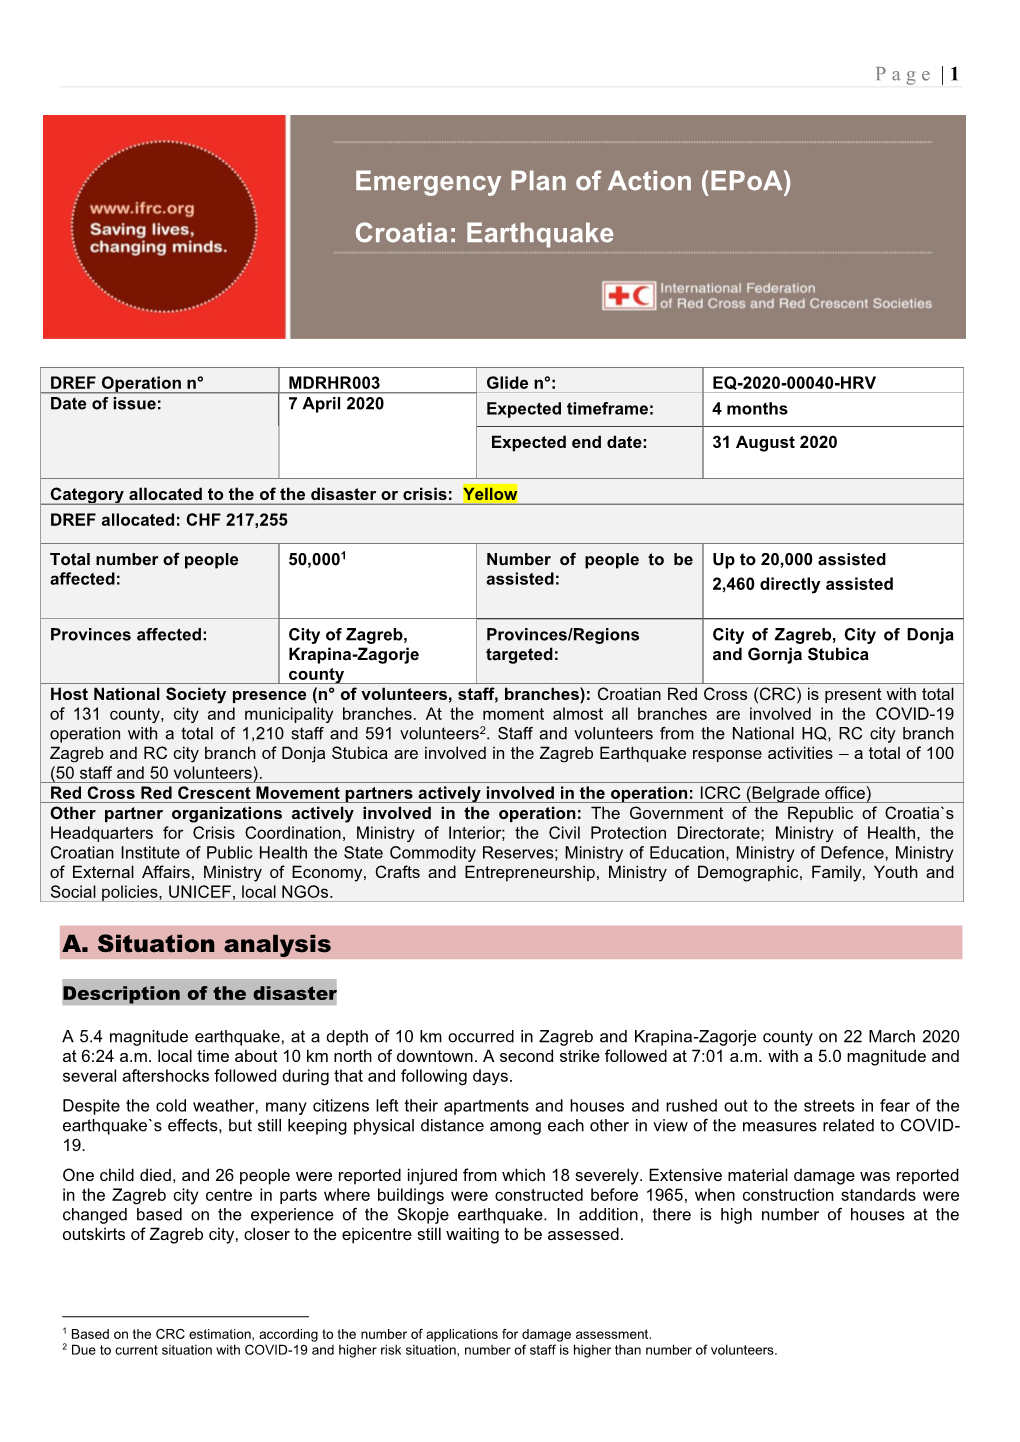 Croatia: Earthquake